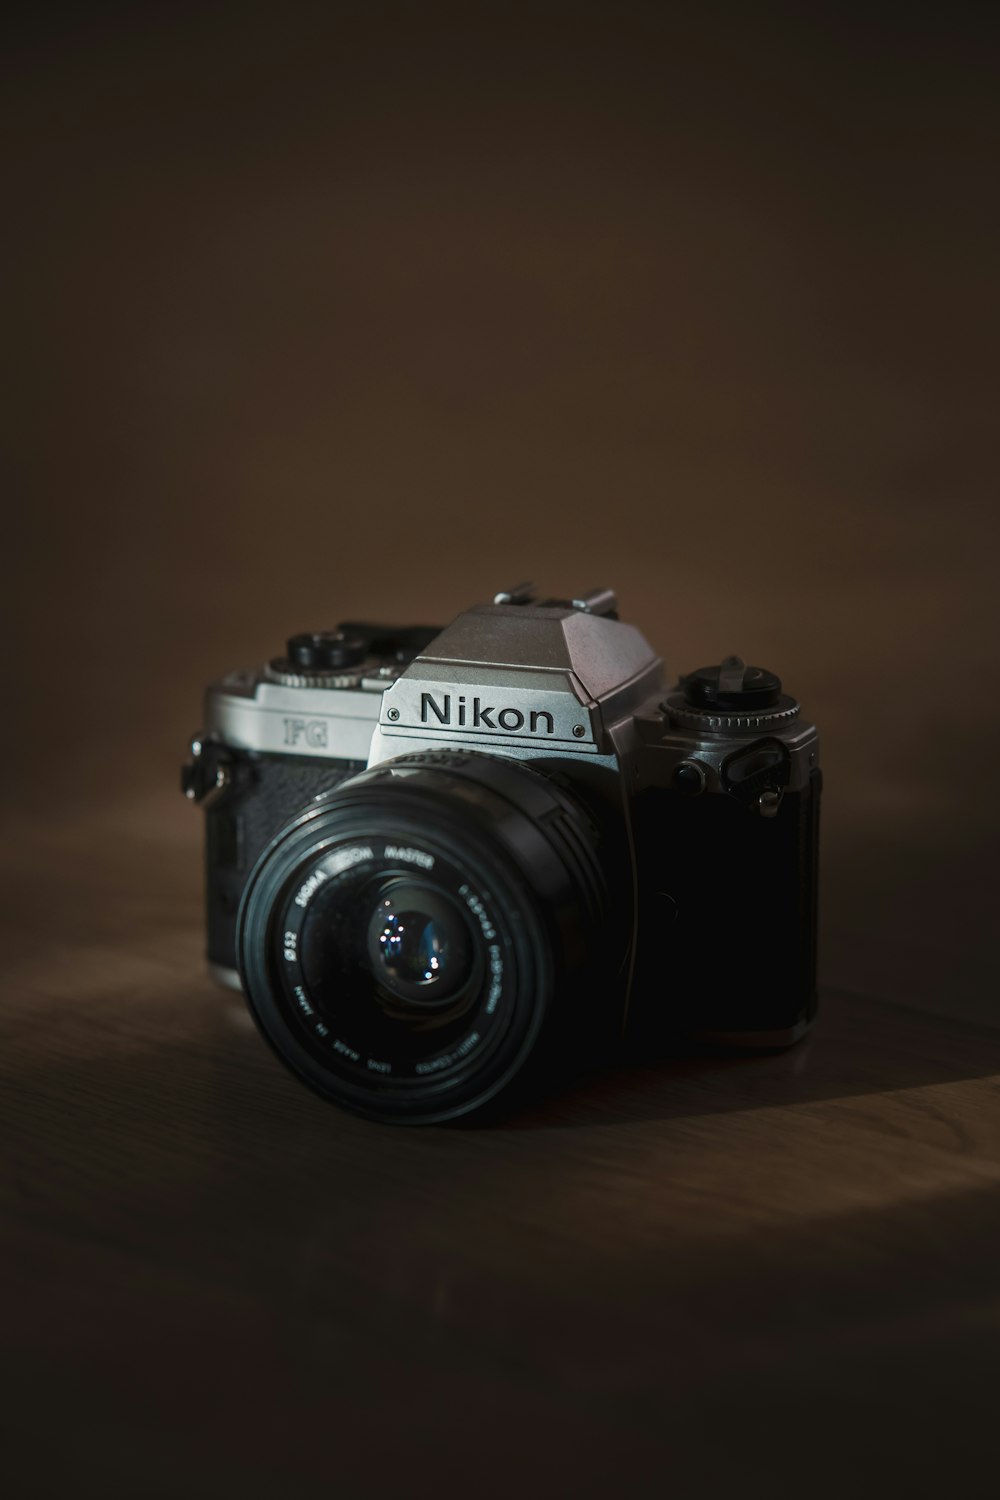 a camera with a nikon logo on it